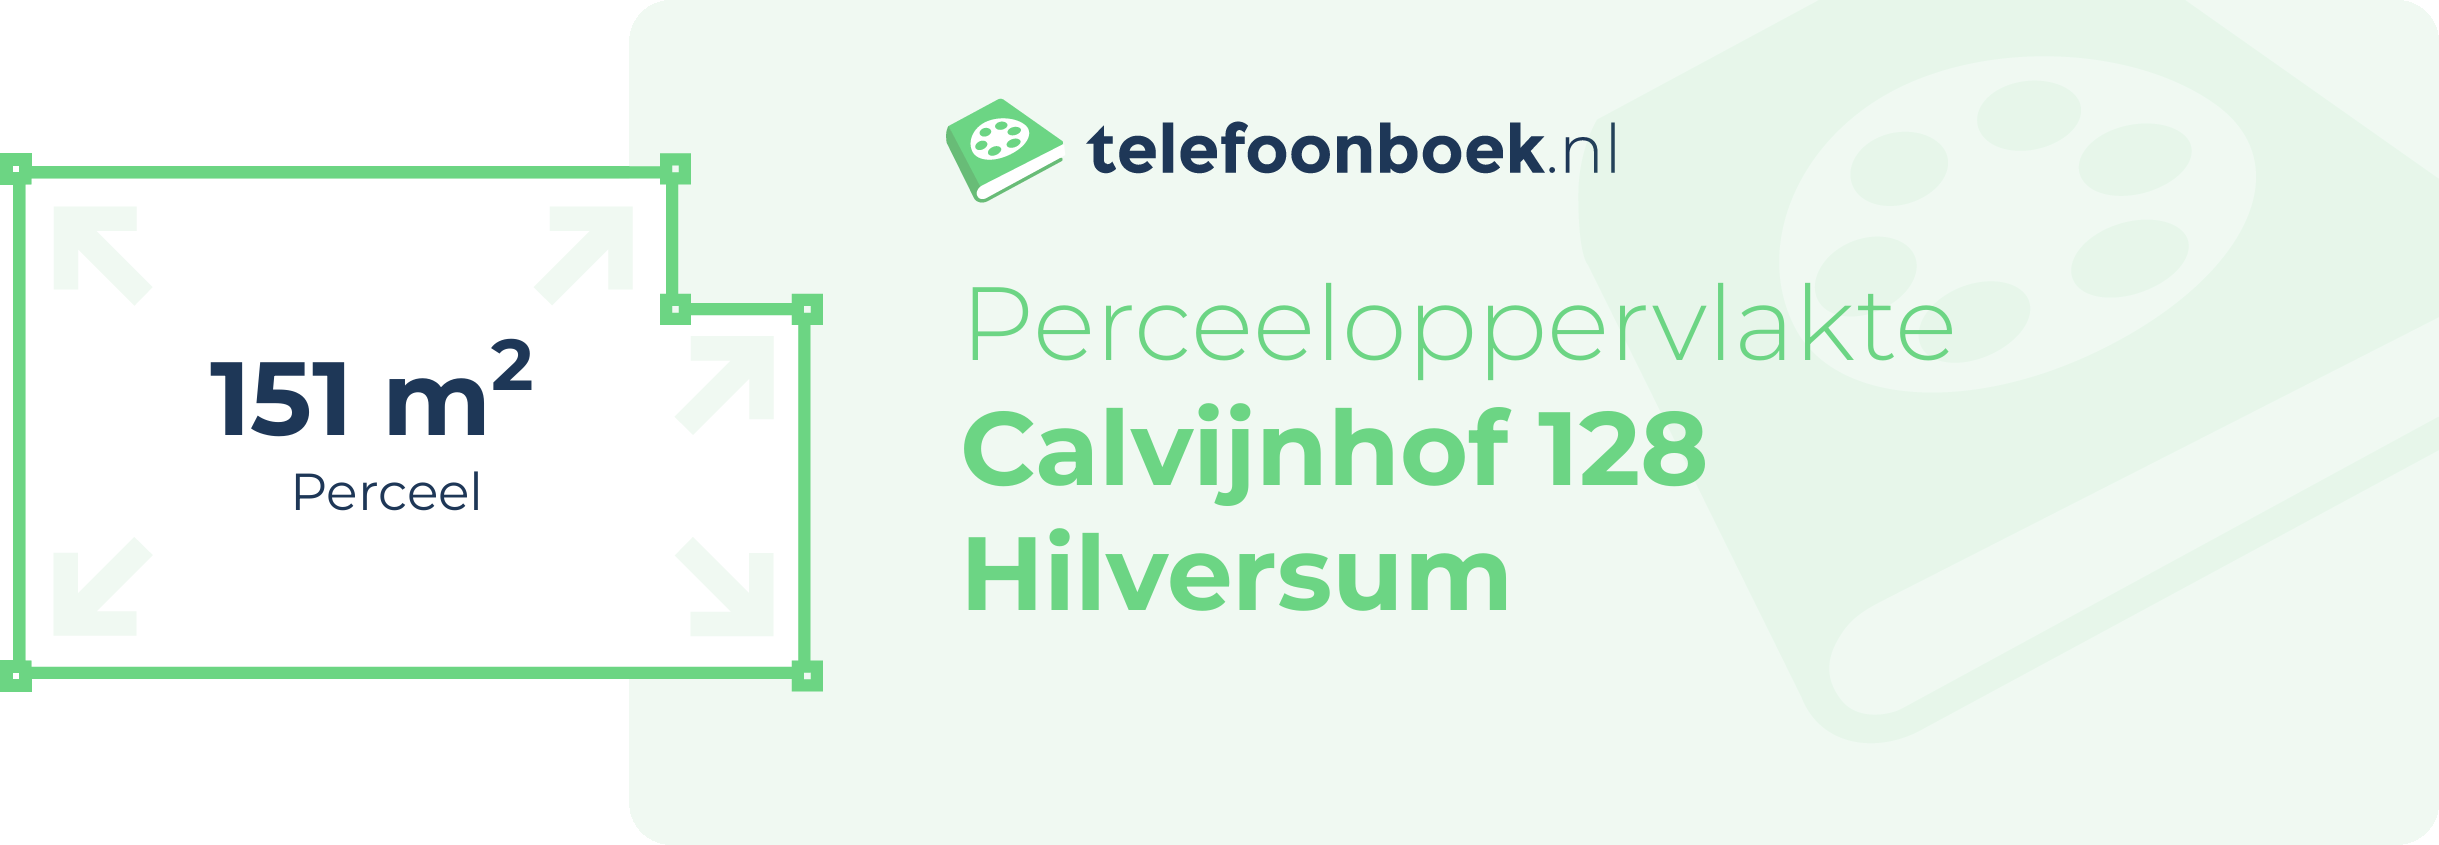 Perceeloppervlakte Calvijnhof 128 Hilversum